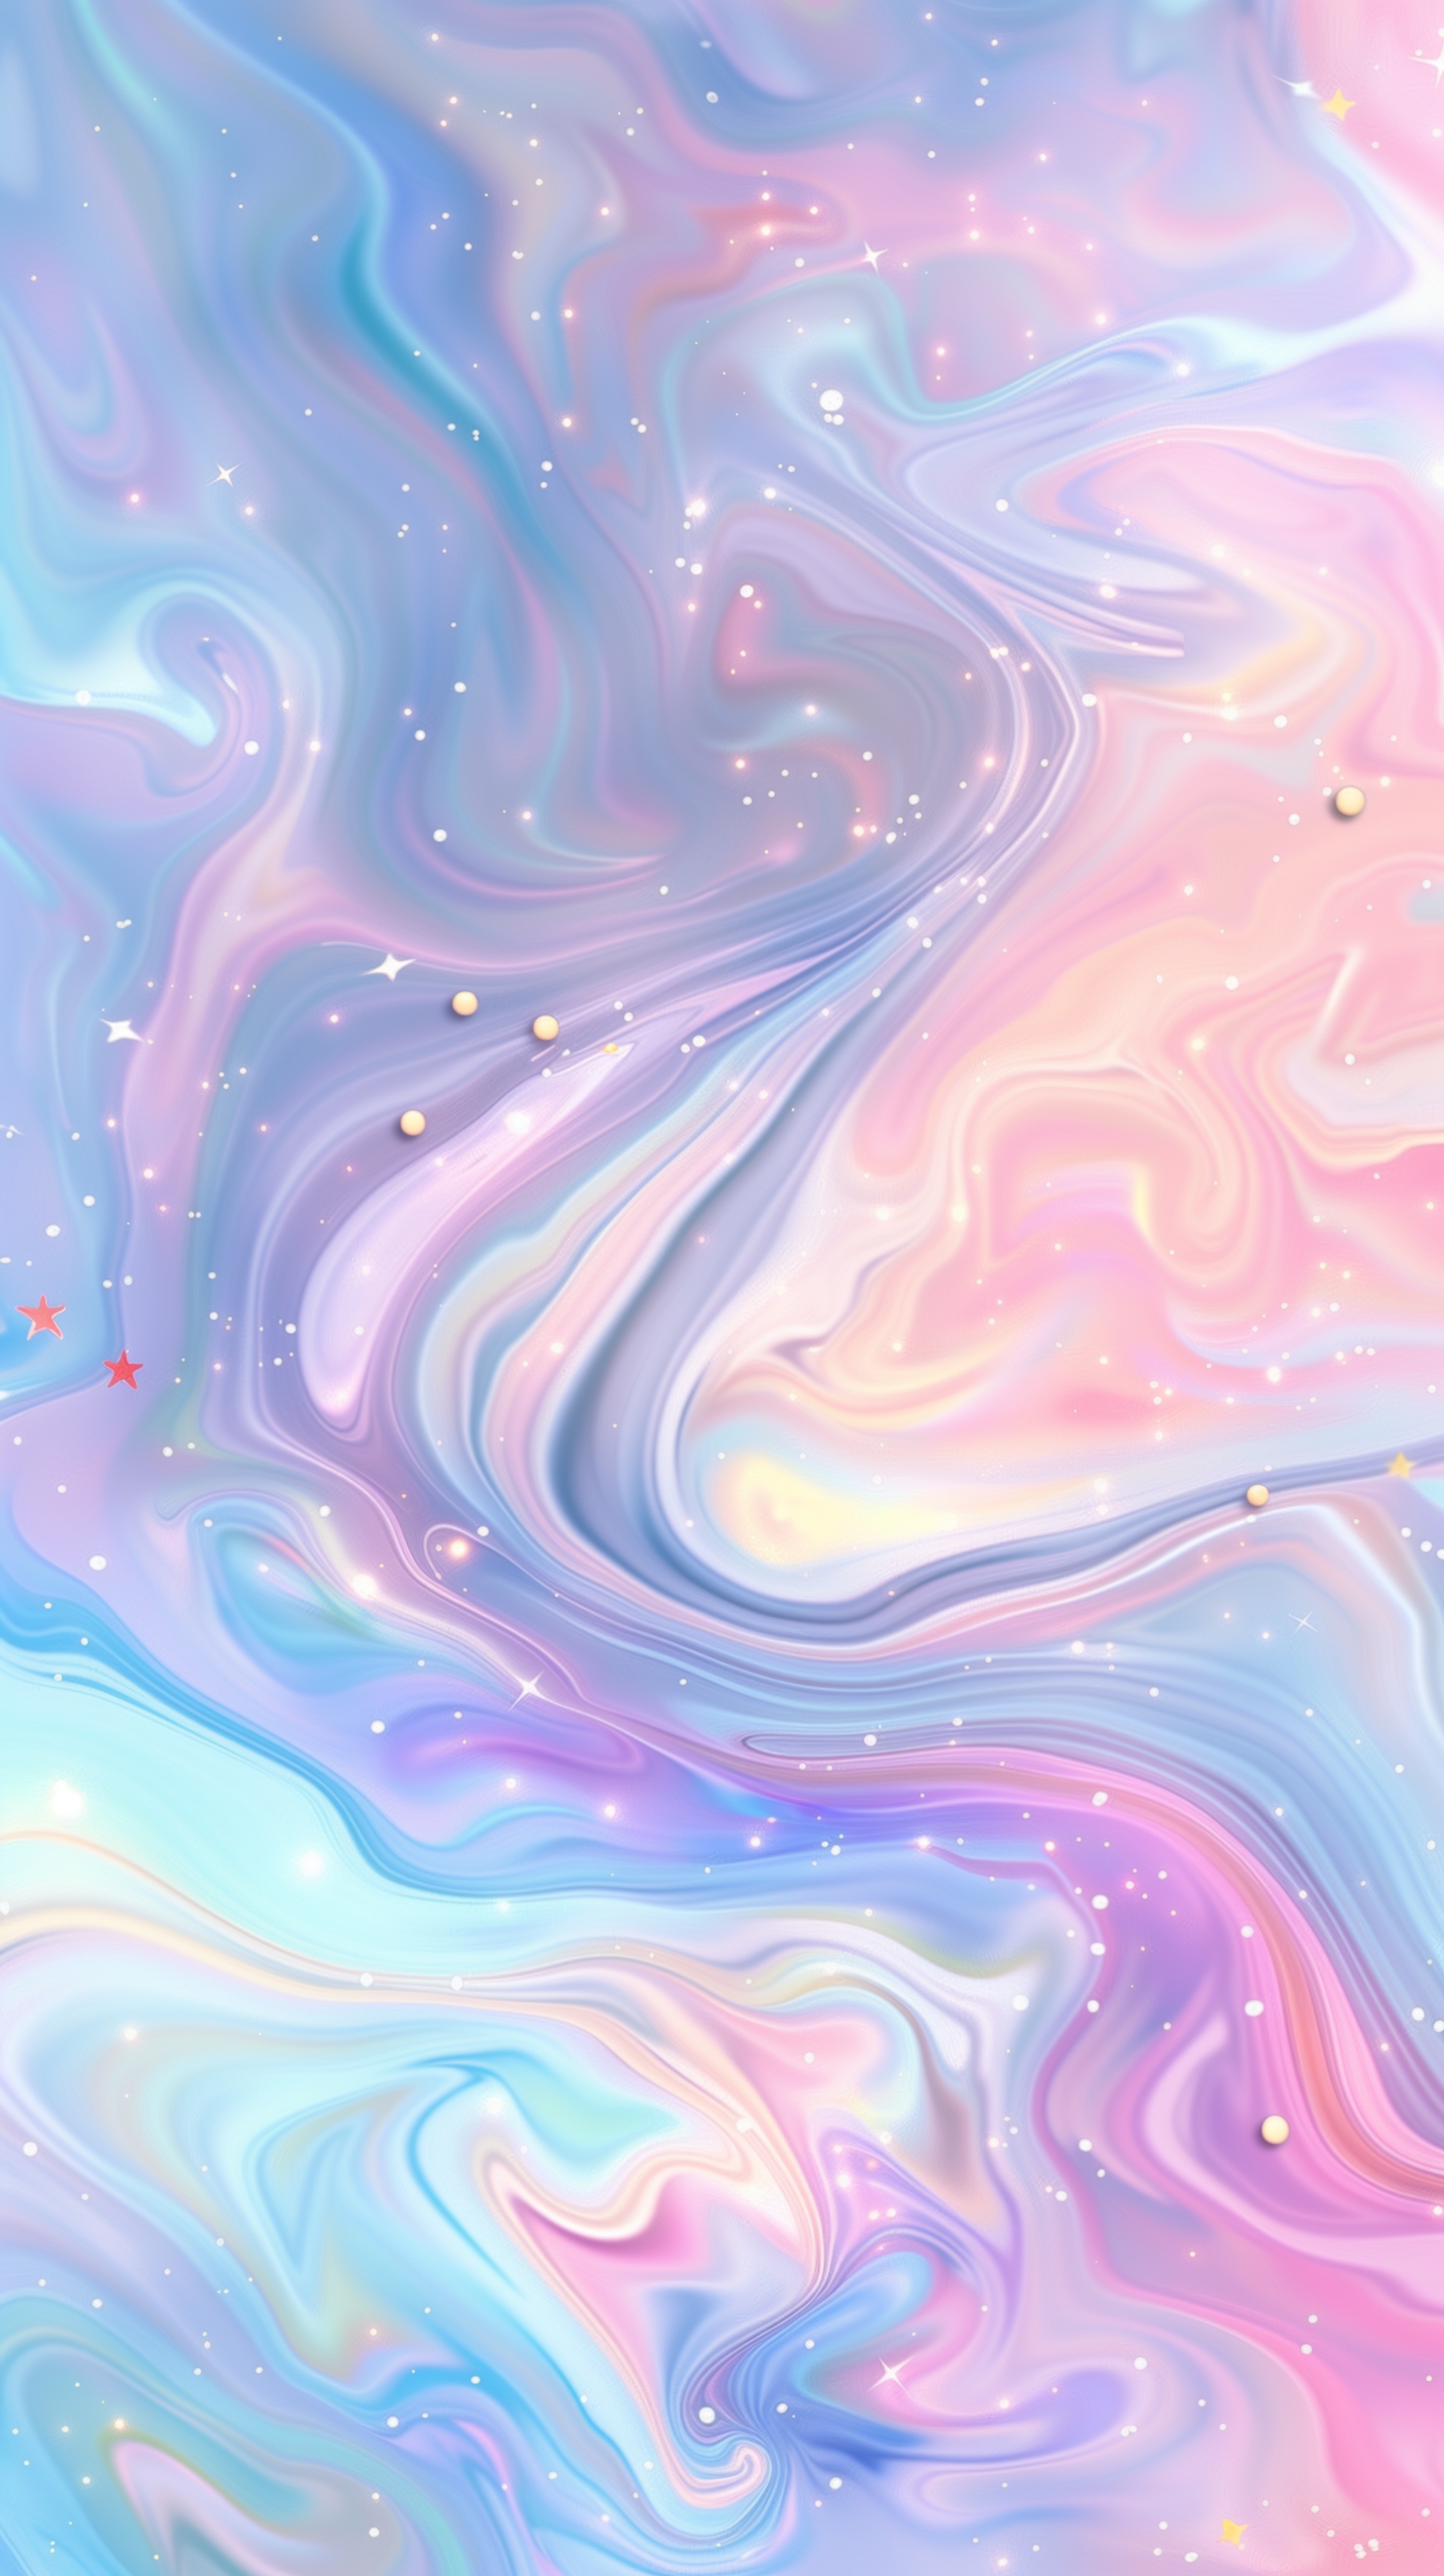 Swirling Pastel Galaxy with Stars Tapeta[58935a042c3f47169f40]